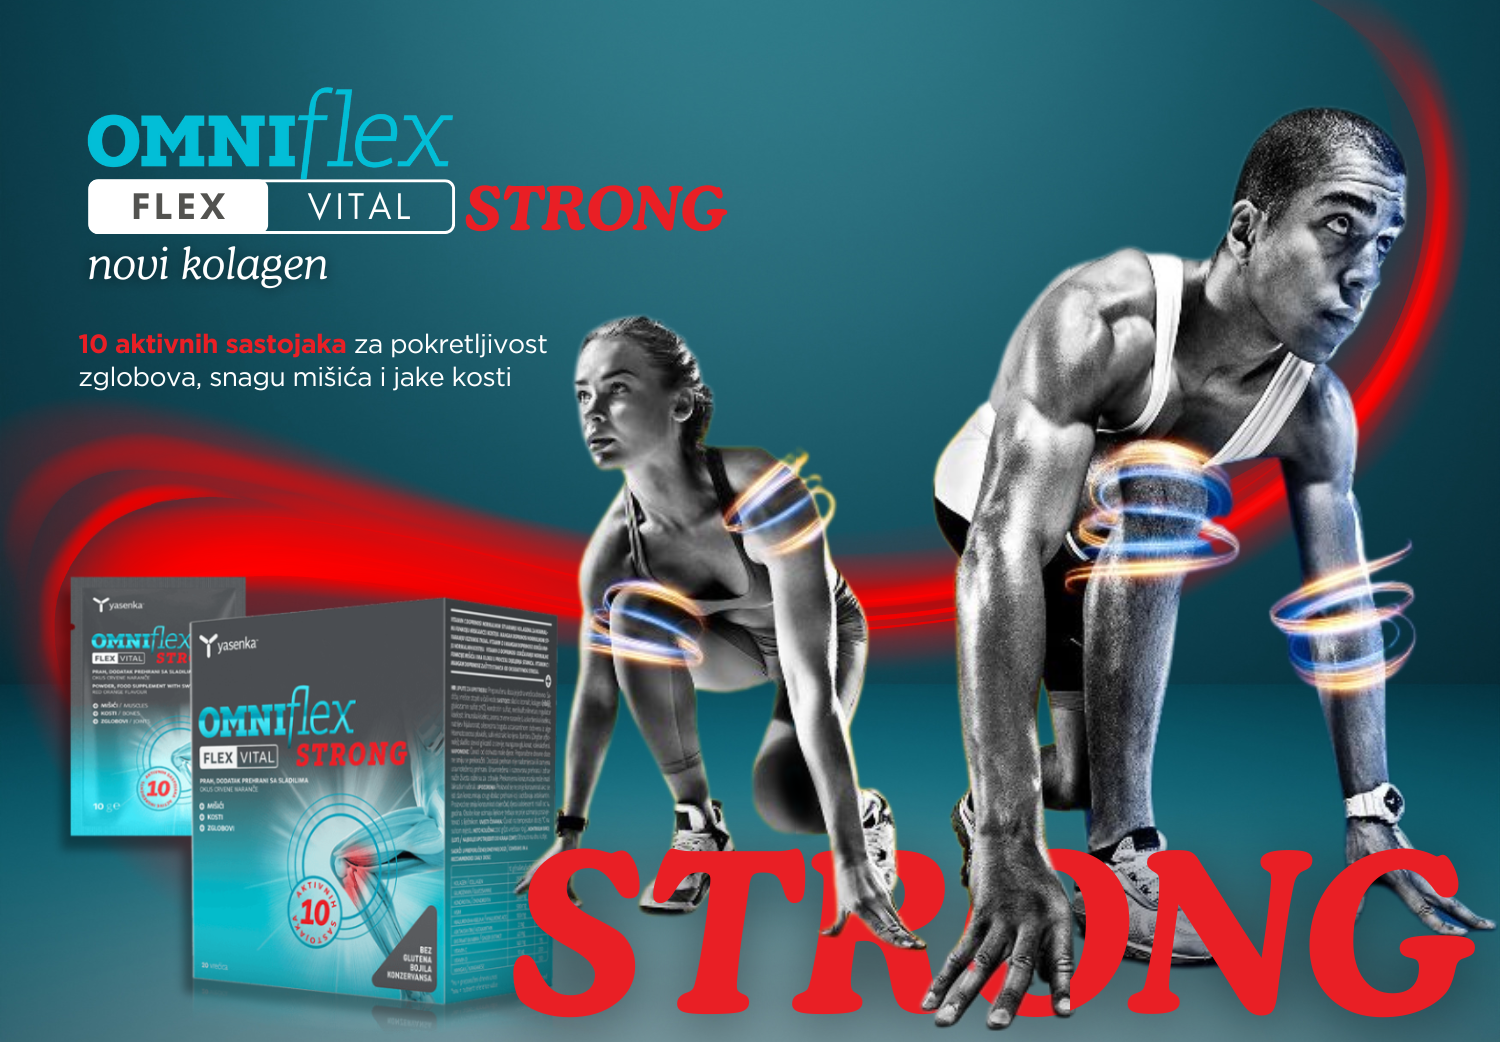 Novi kolagen Omniflex Flexvital Strong za pokretljivost zglobova, snagu mišića i jake kosti